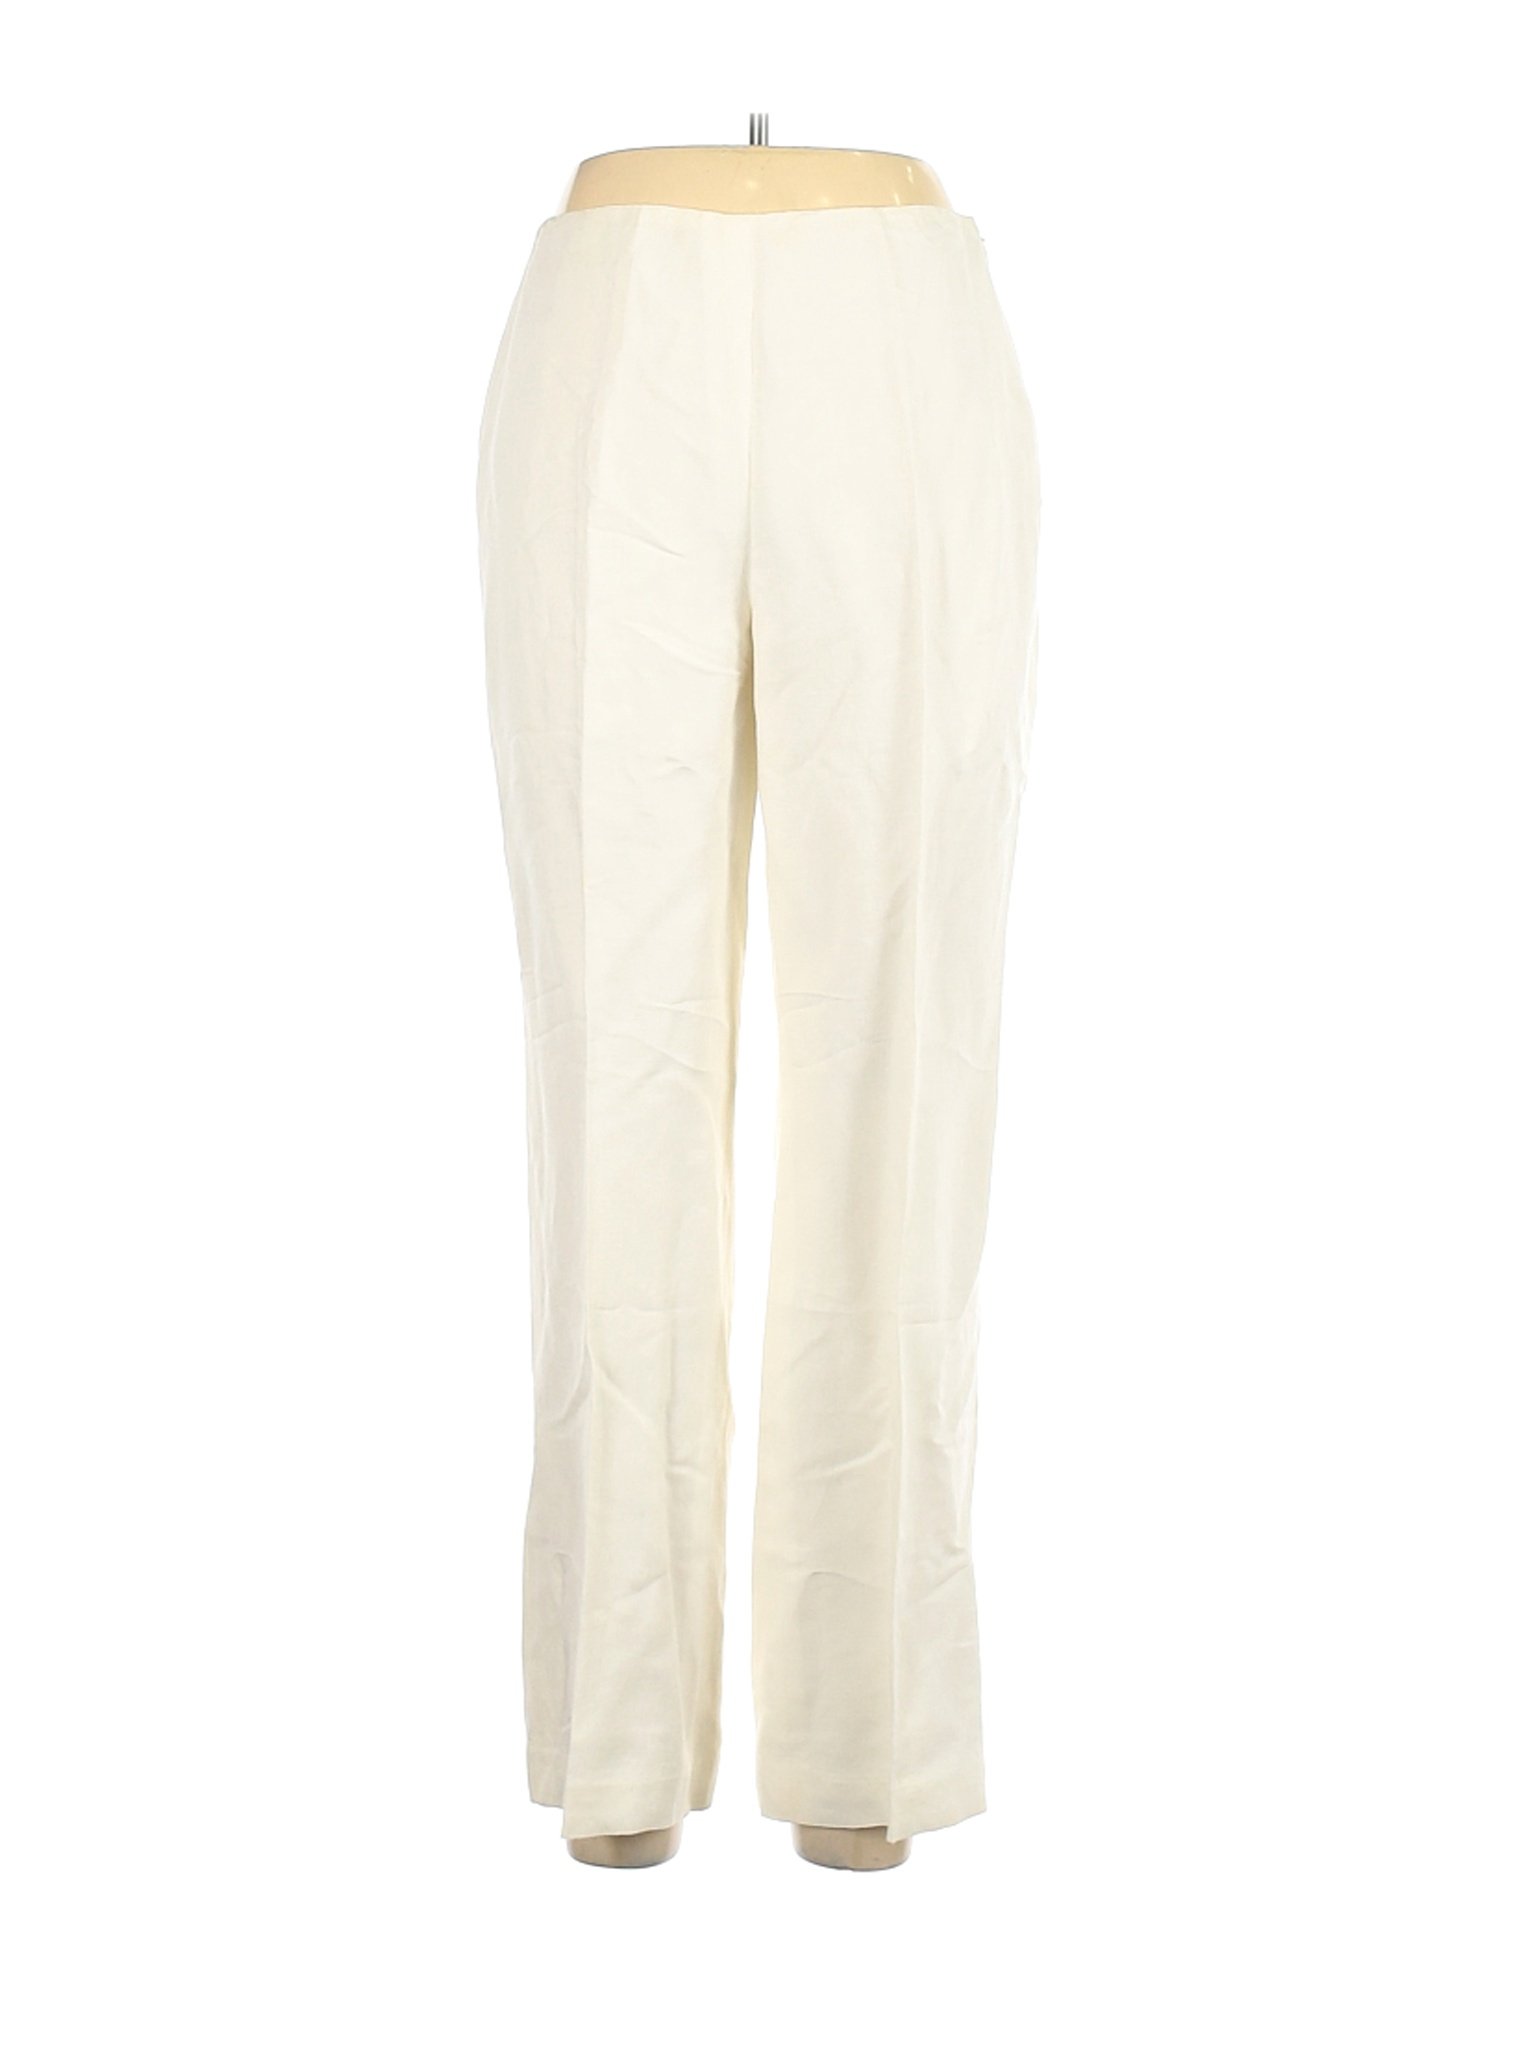 Ann Taylor LOFT Women Ivory Linen Pants 10 Petites | eBay